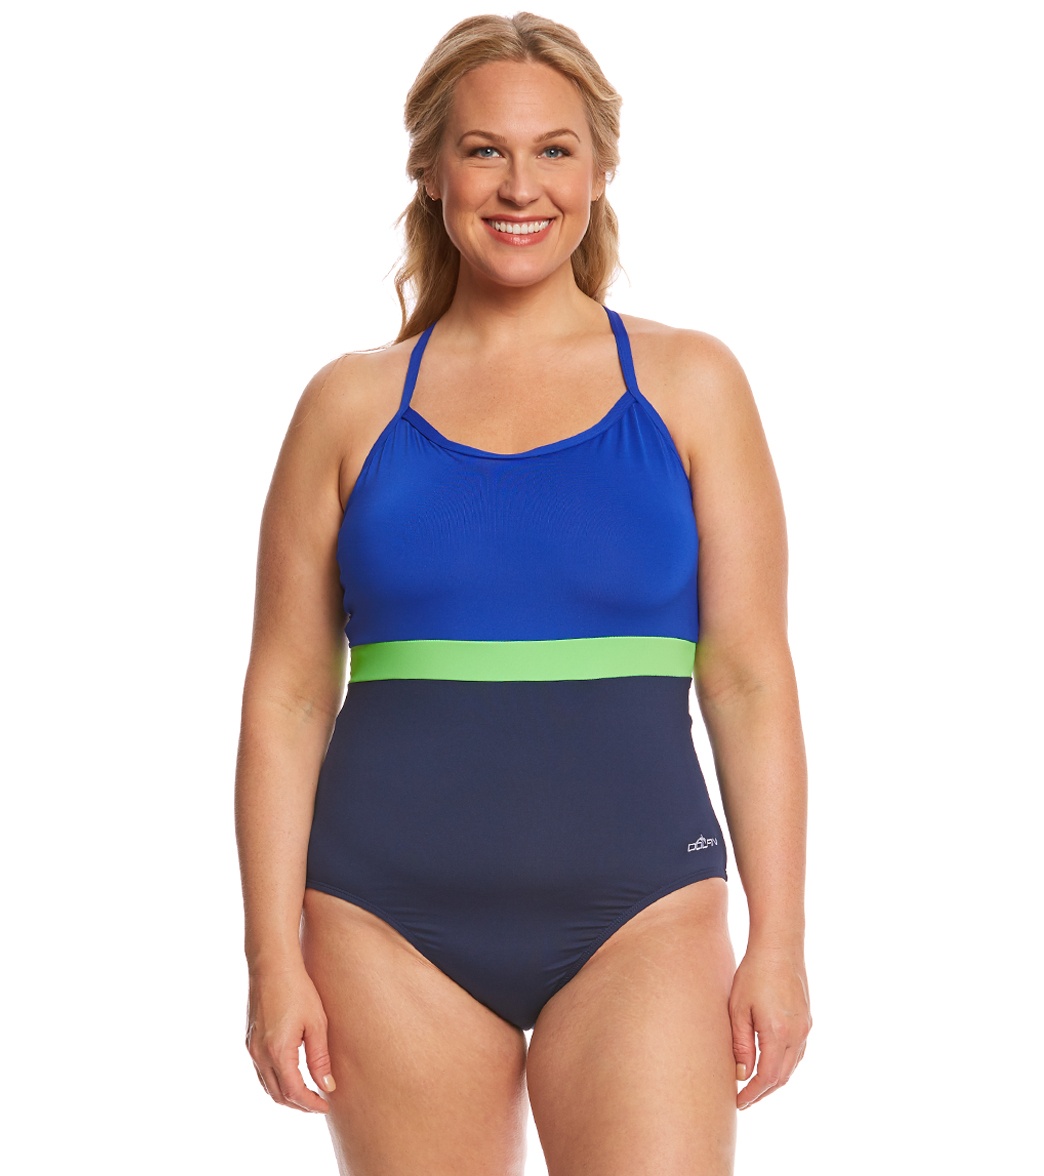 Dolfin Aquashape Women's Plus Size Cross Back One Piece Swimsuit - Navy/Blue/Lime 20 Polyester/Spandex - Swimoutlet.com